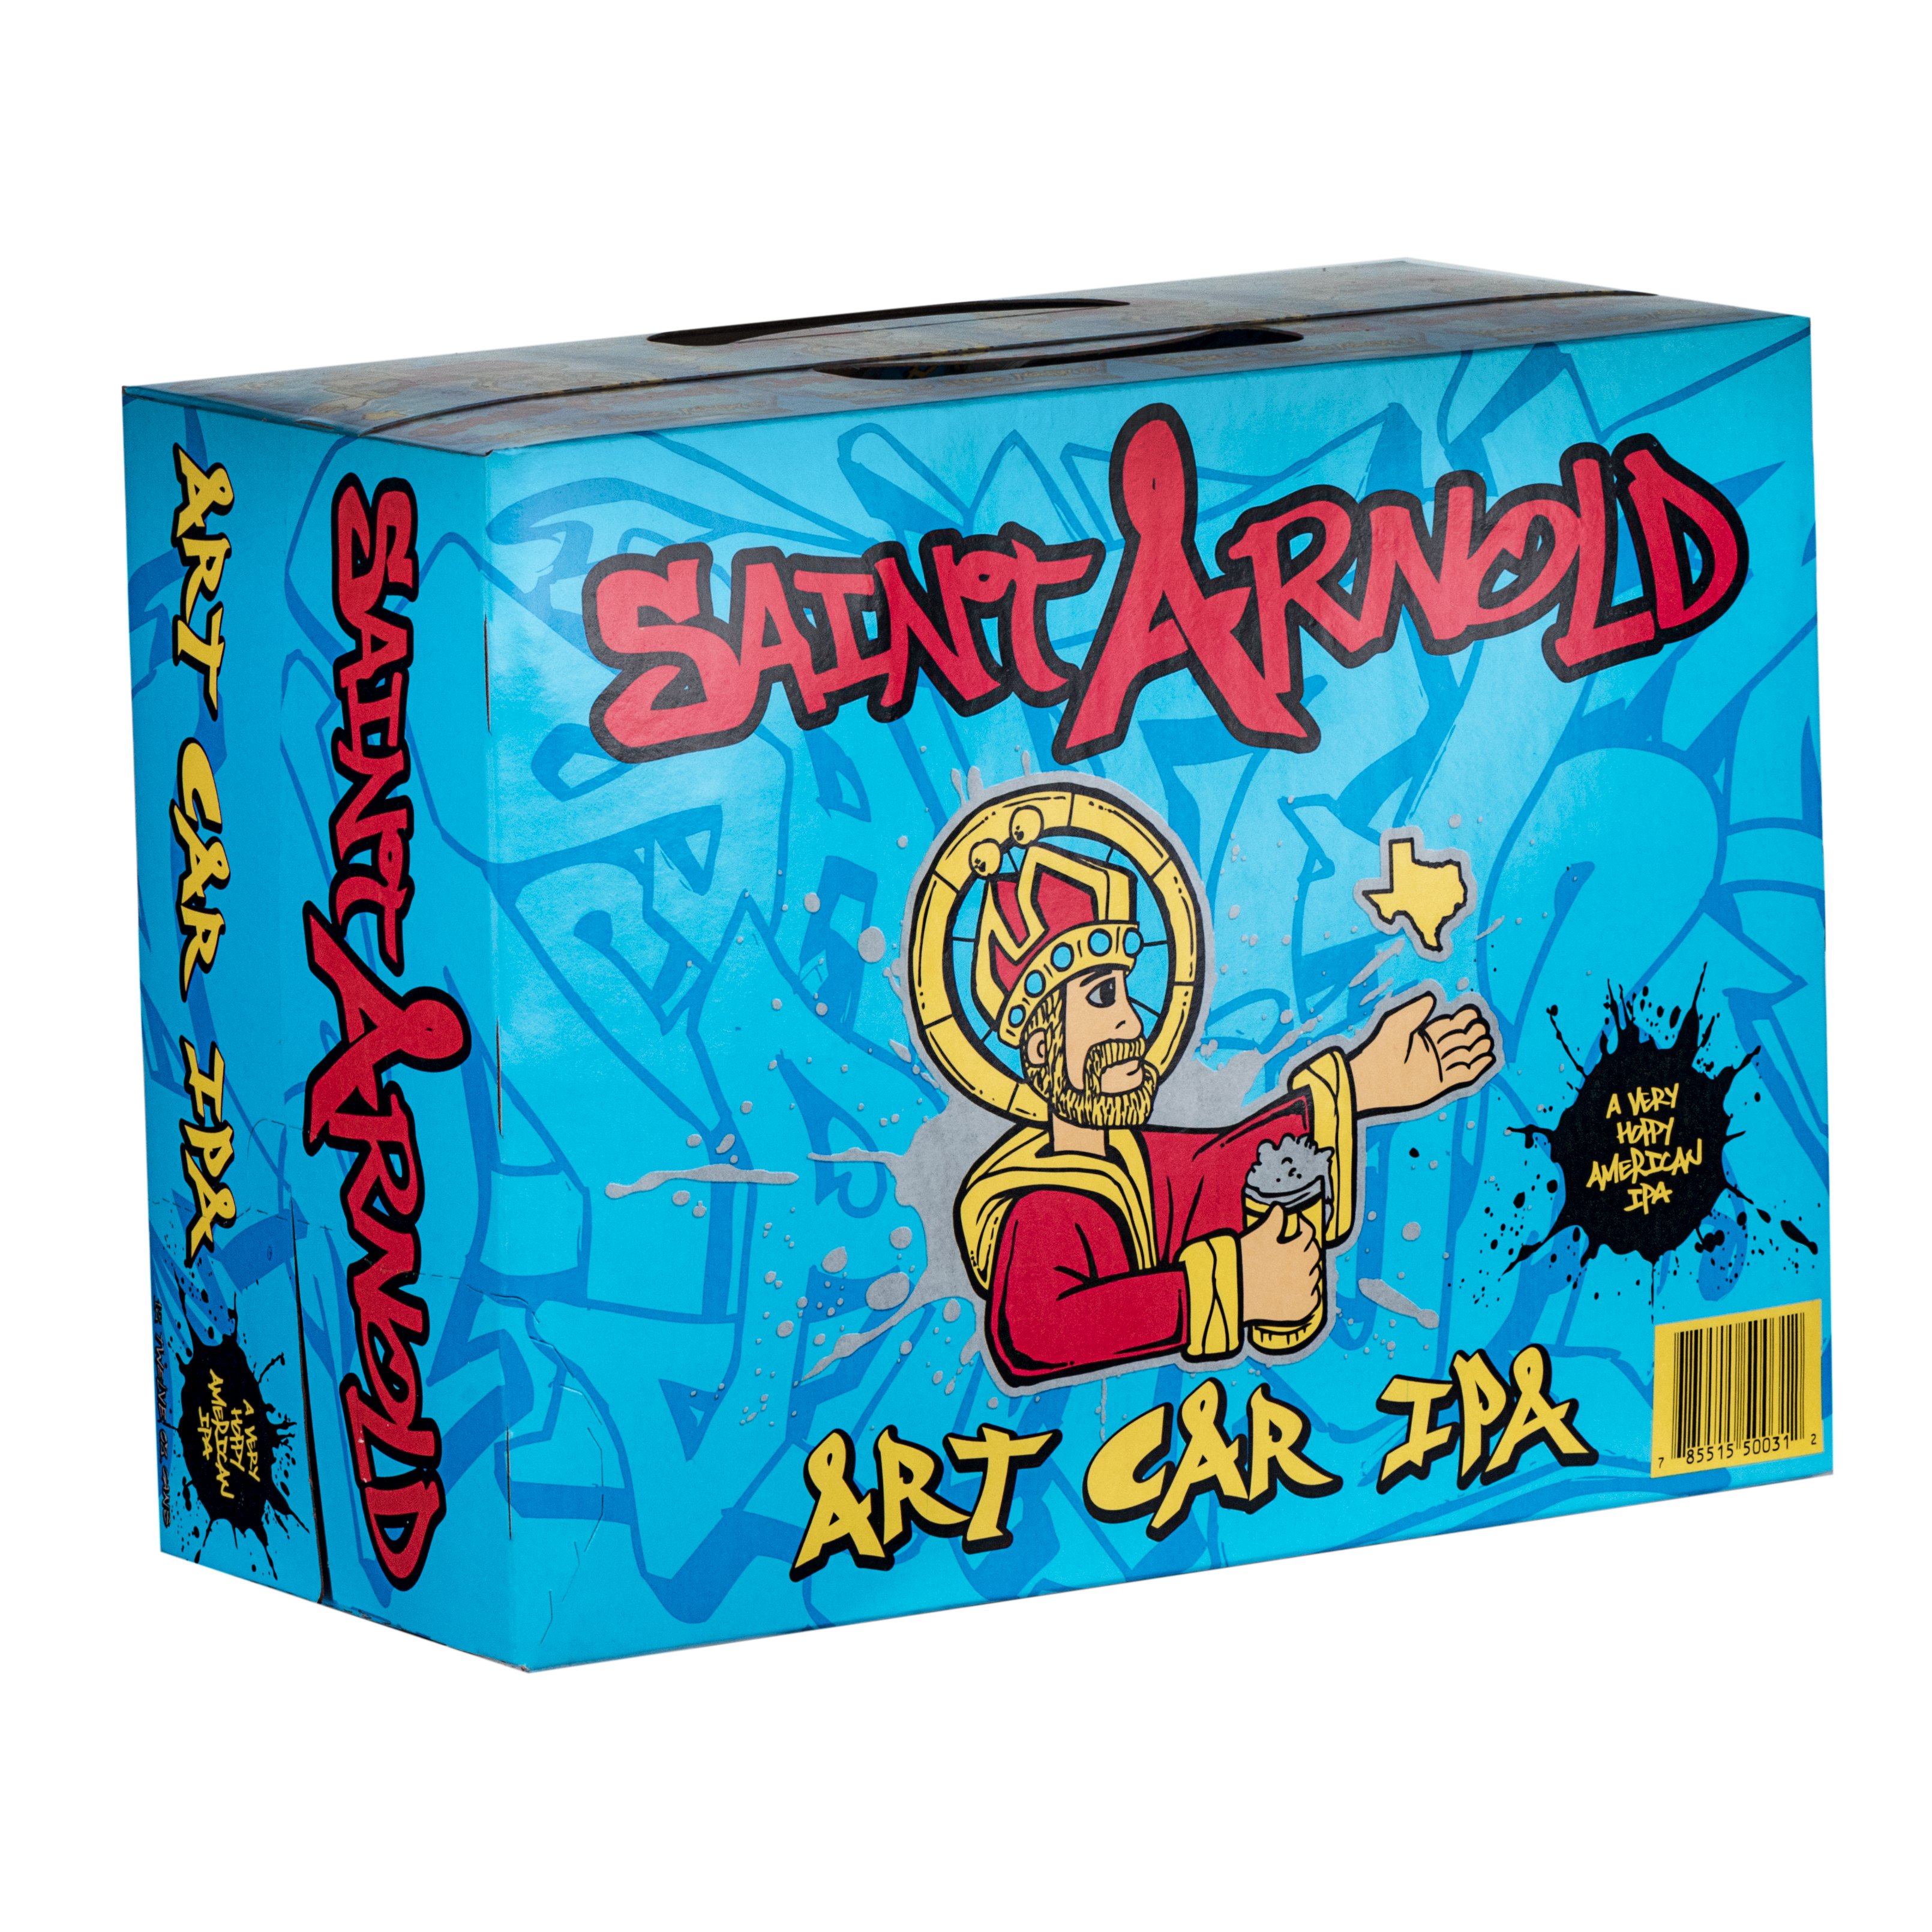 Saint Arnold Art Car IPA Beer 12 oz Cans - Shop Beer & Wine at H-E-B